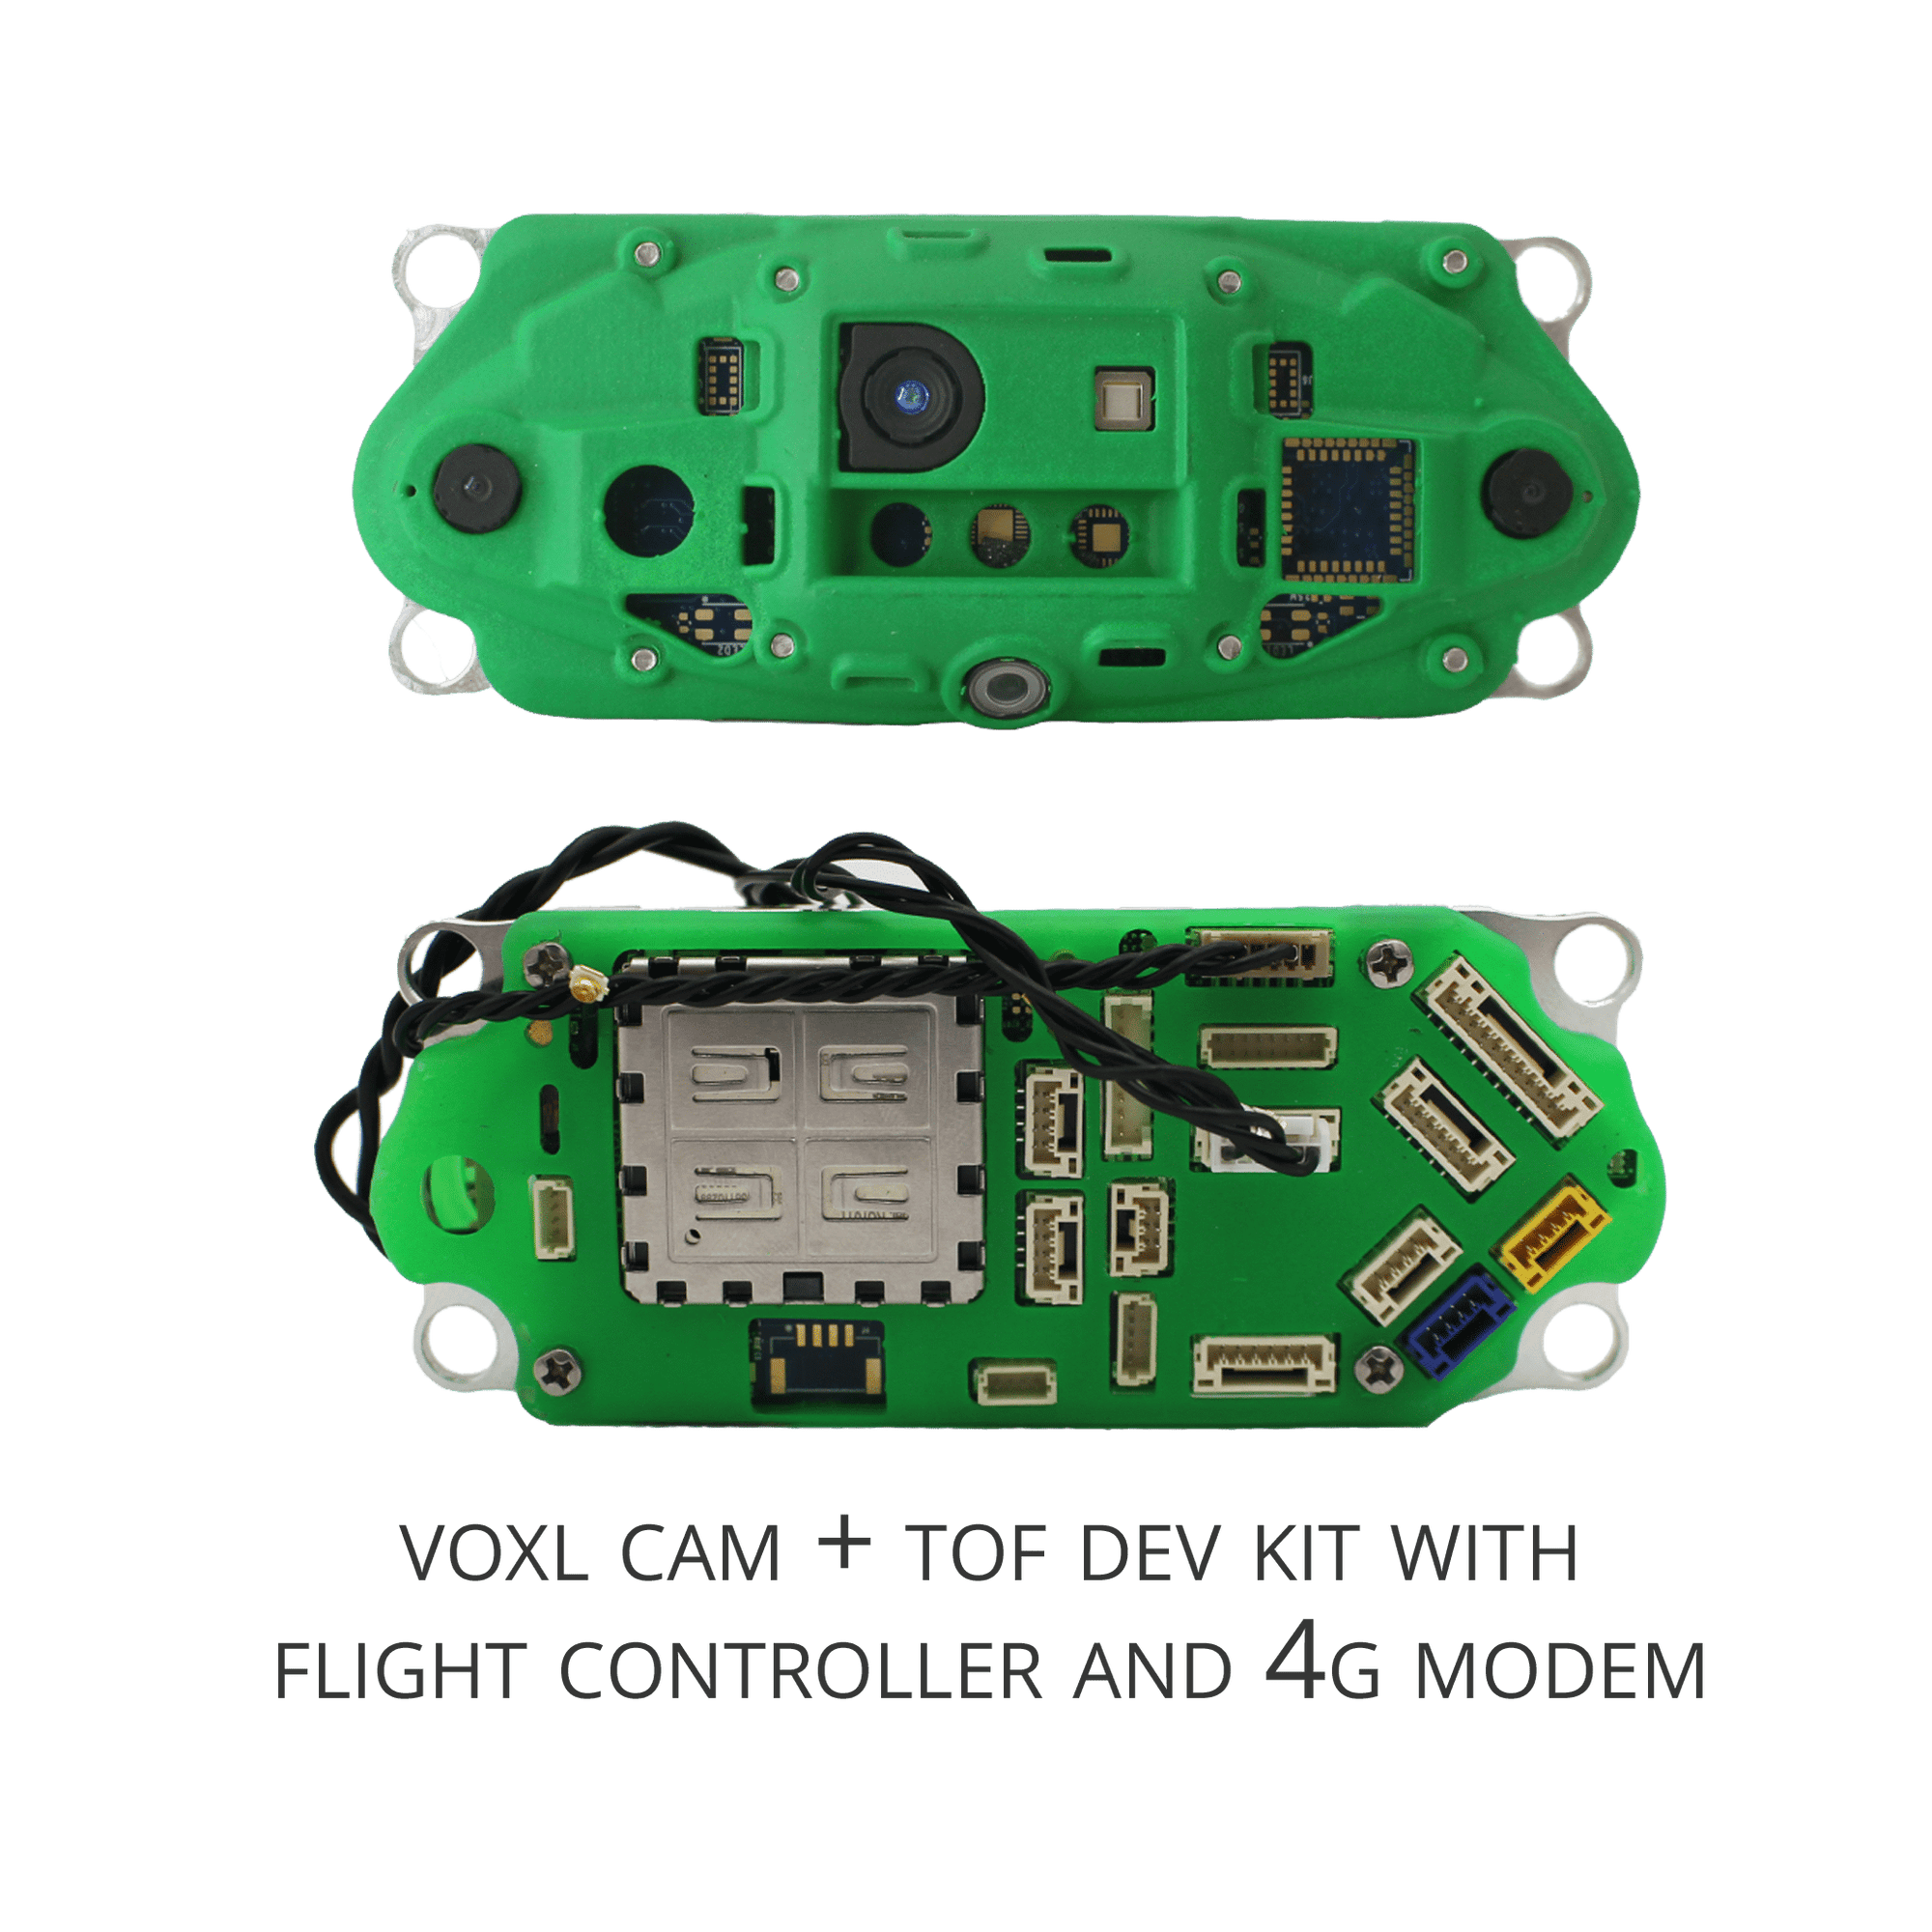 ModalAI, Inc. Dev Kit VOXL CAM + TOF Dev Kit w/ Flight Controller and 4G Modem (Europe) VOXL CAM Fully Integrated Robot Perception System